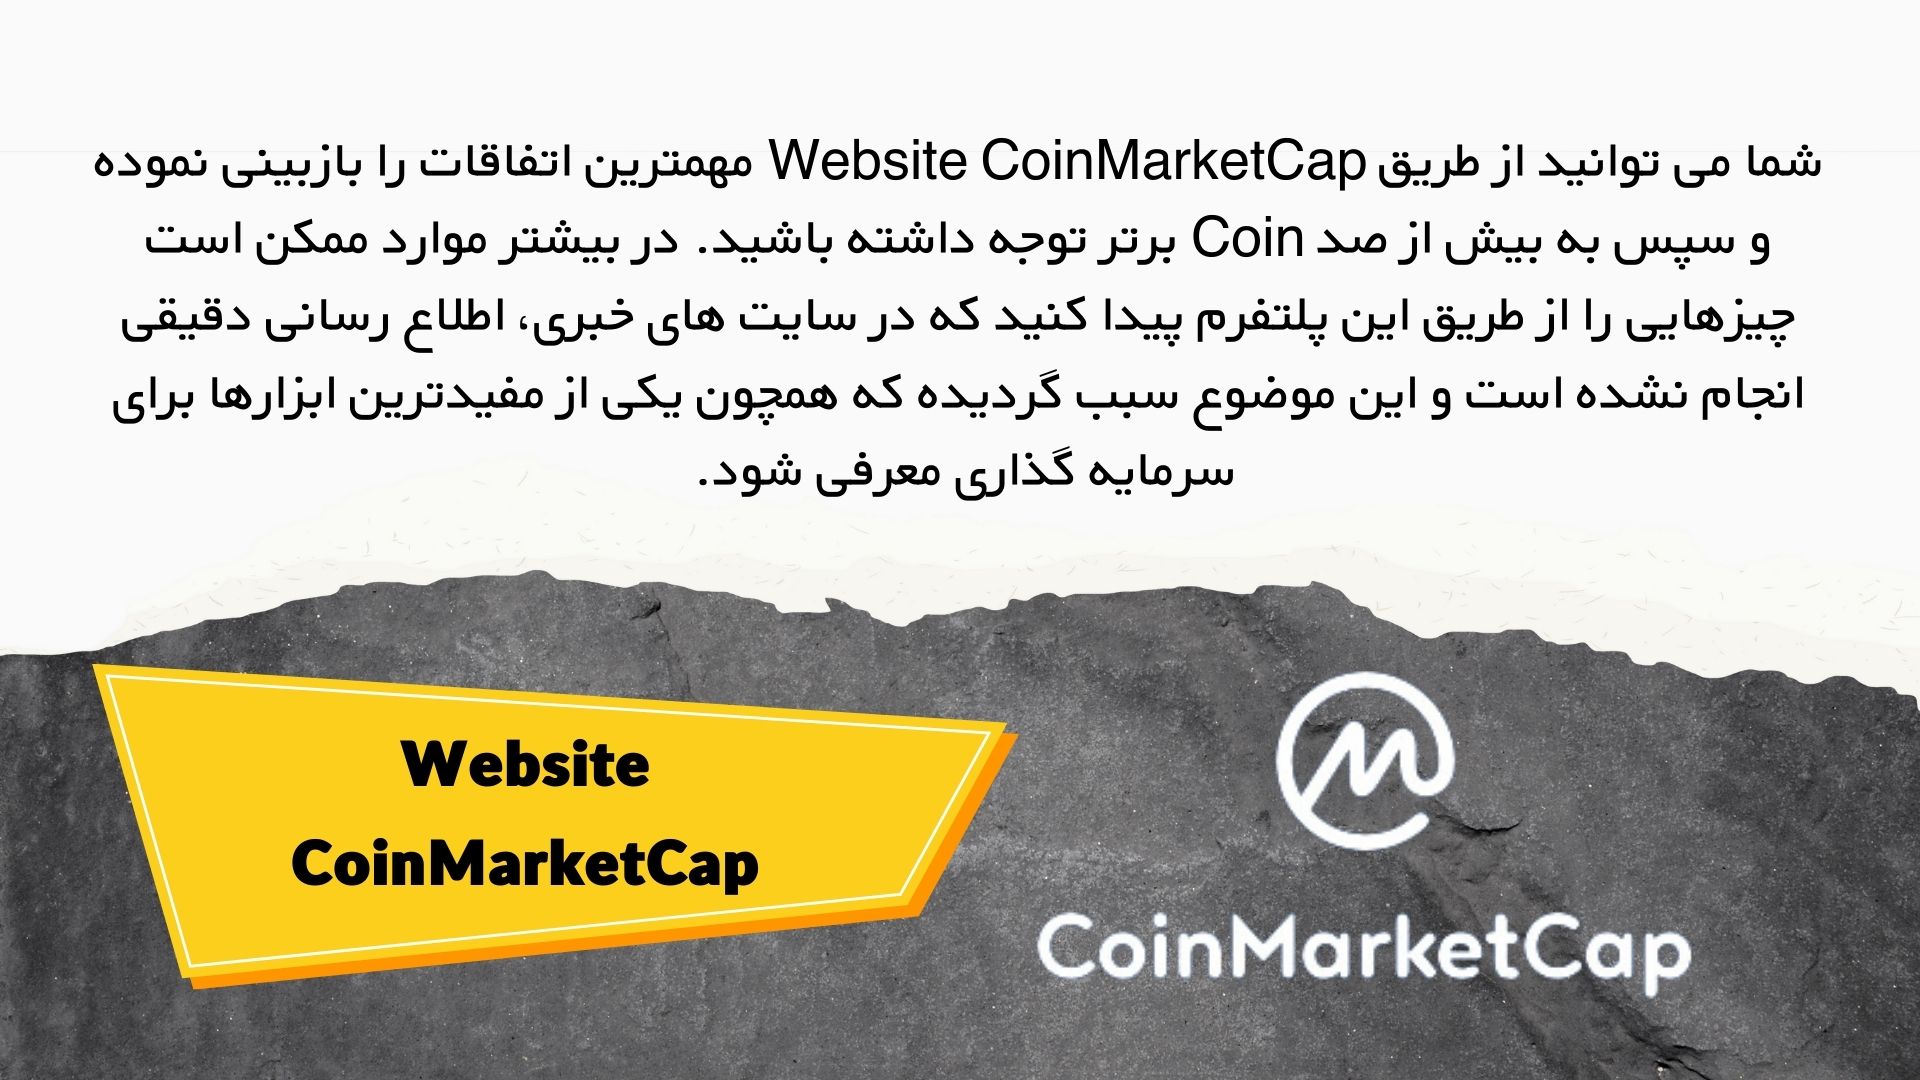 Website CoinMarketCap: